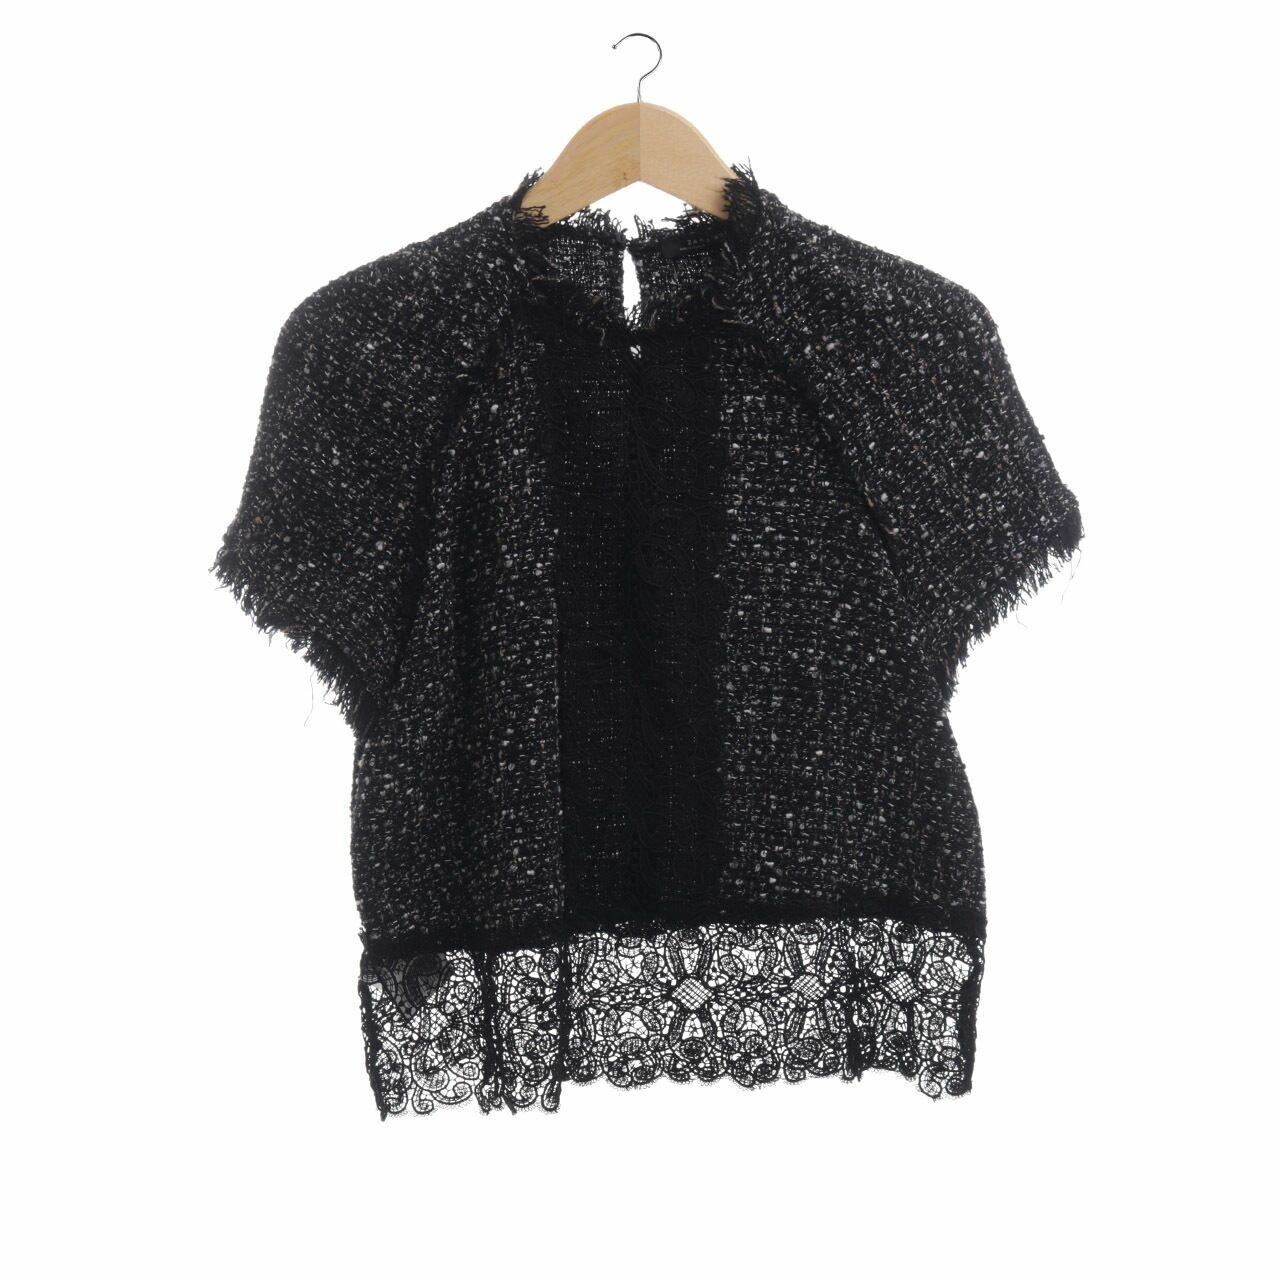 Zara Black Tweed Lace Blouse